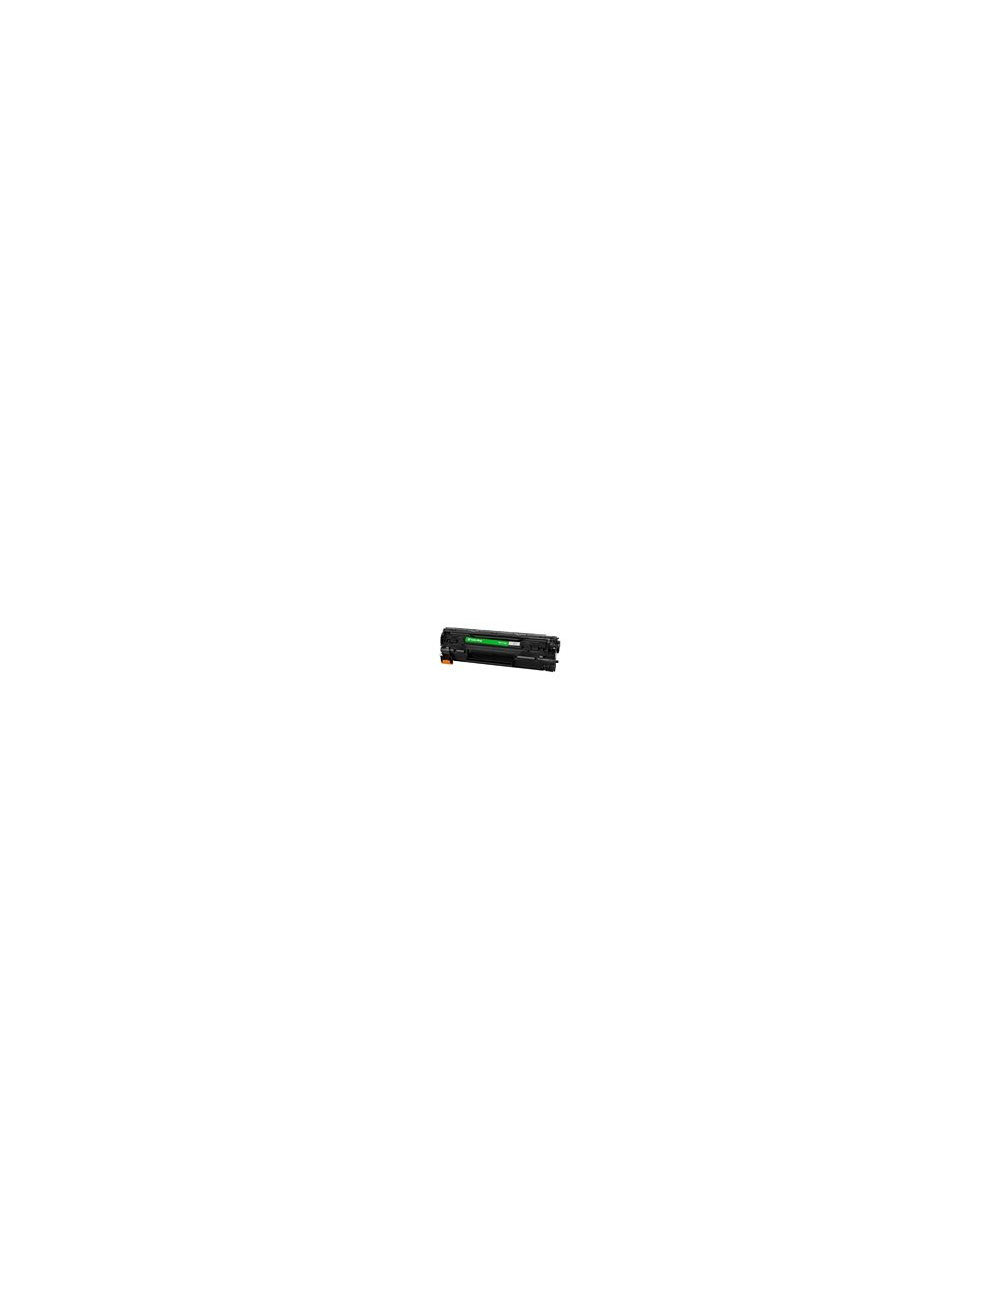 ColorWay Toner Cartridge Black